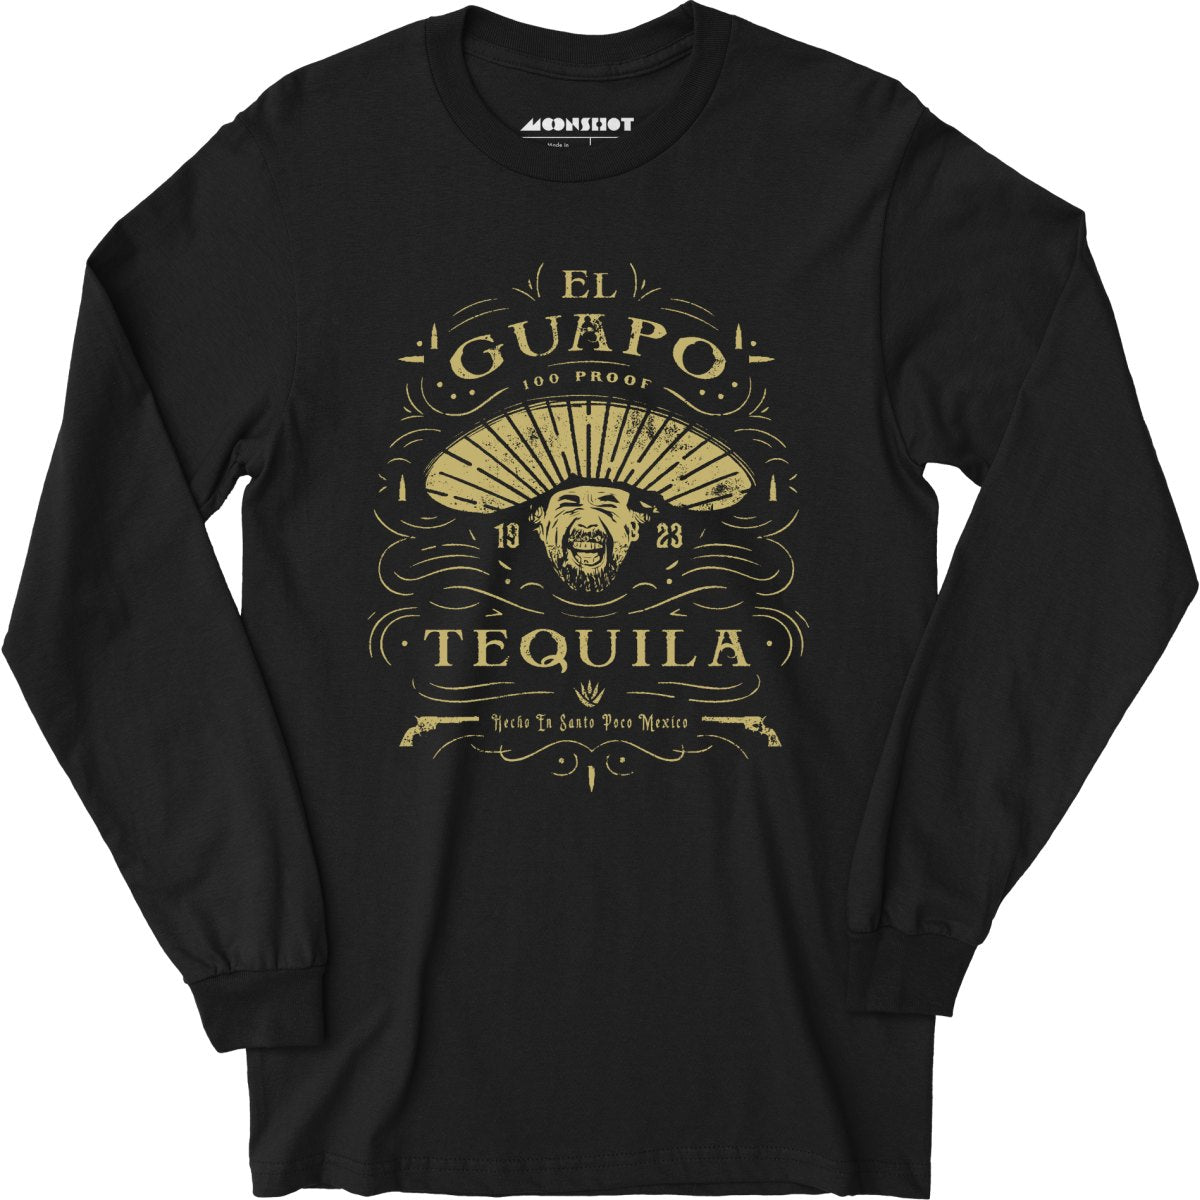 El Guapo Tequila - Long Sleeve T-Shirt